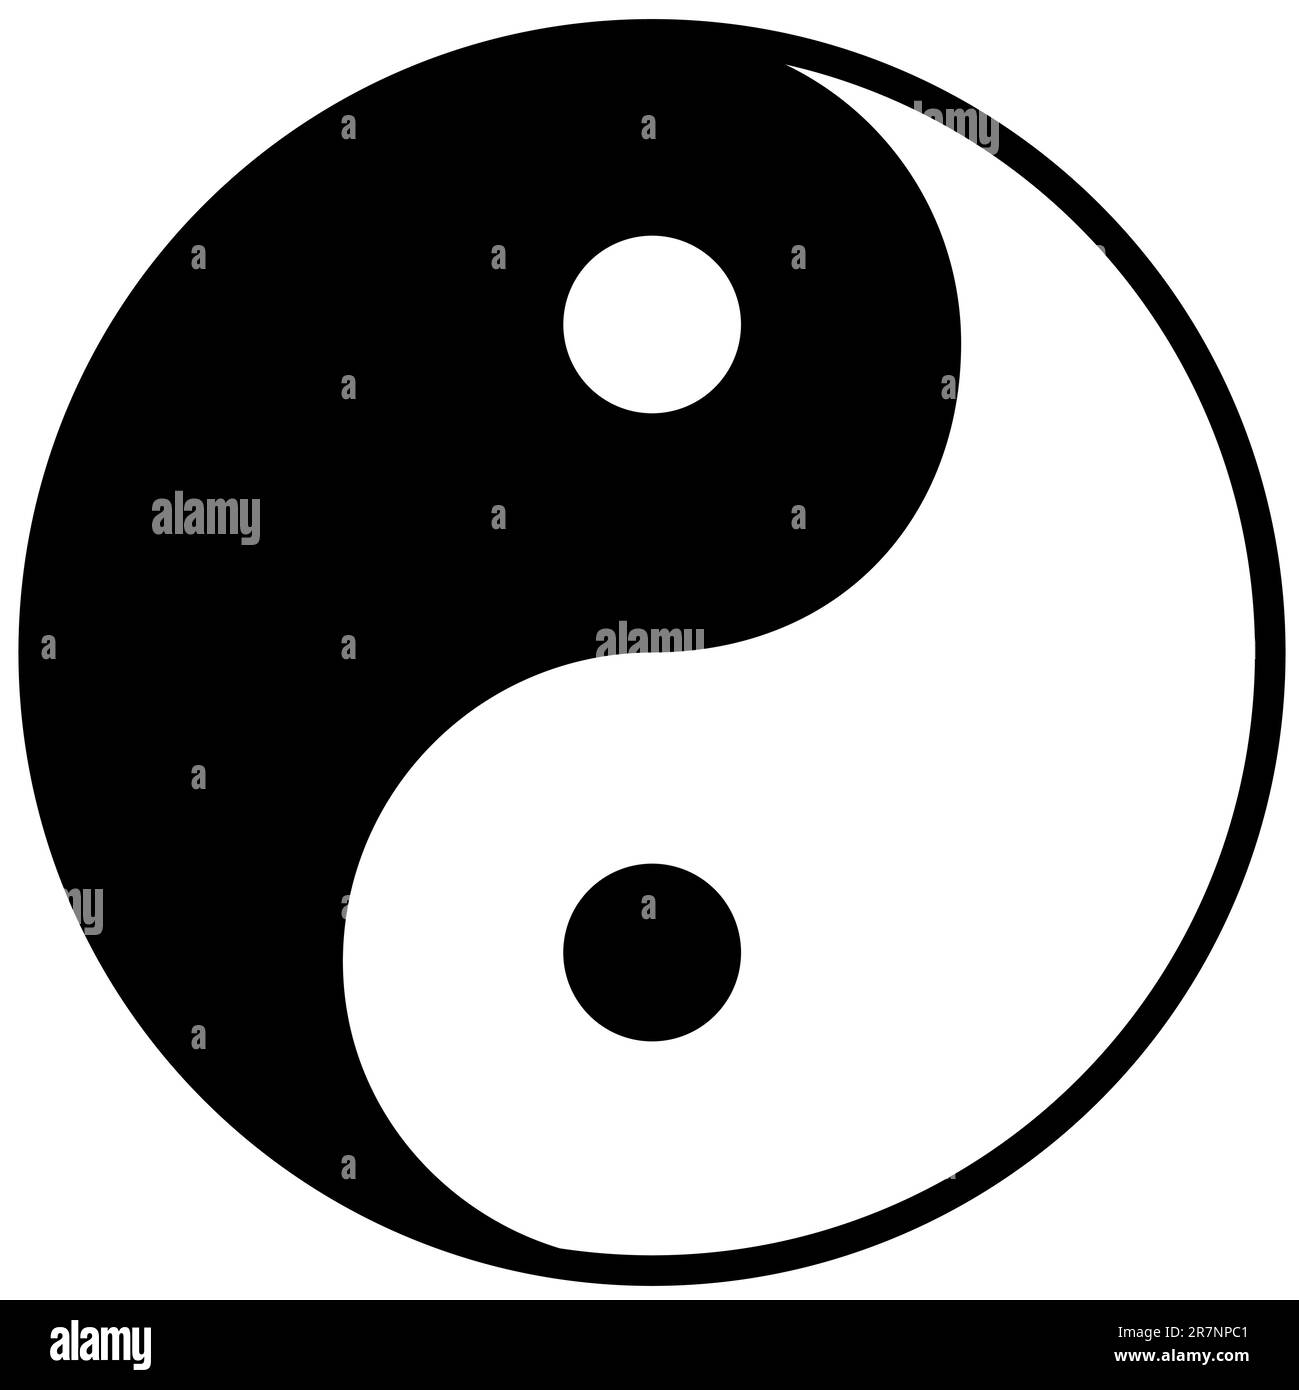 Ying yang simbolo di armonia ed equilibrio, illustrazione vettoriale Illustrazione Vettoriale